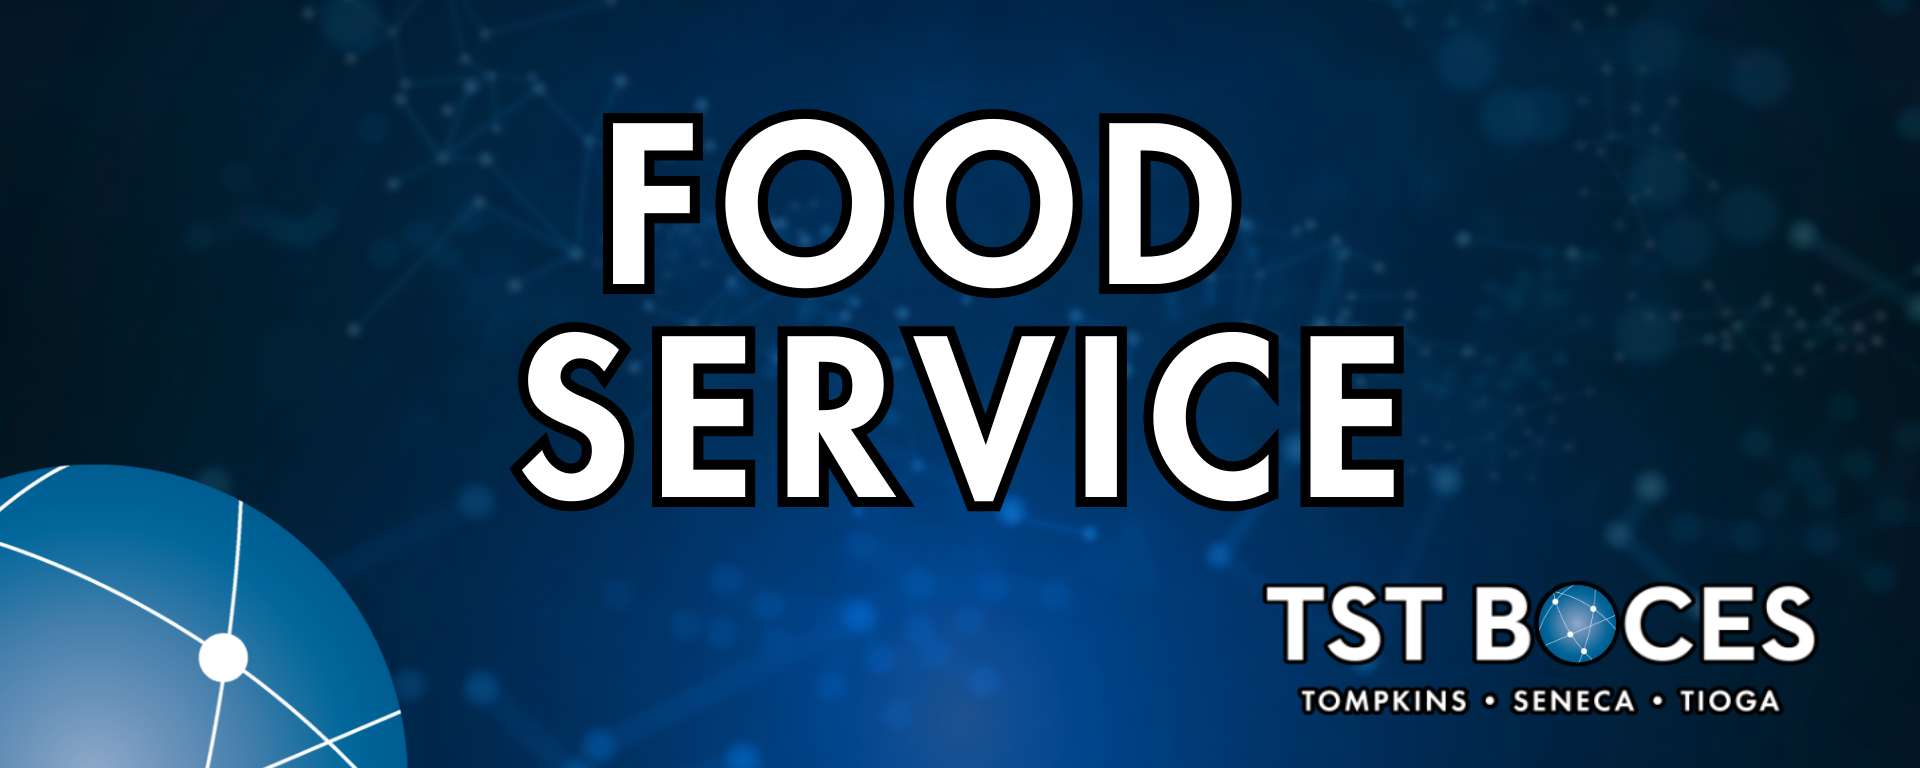 food service banner